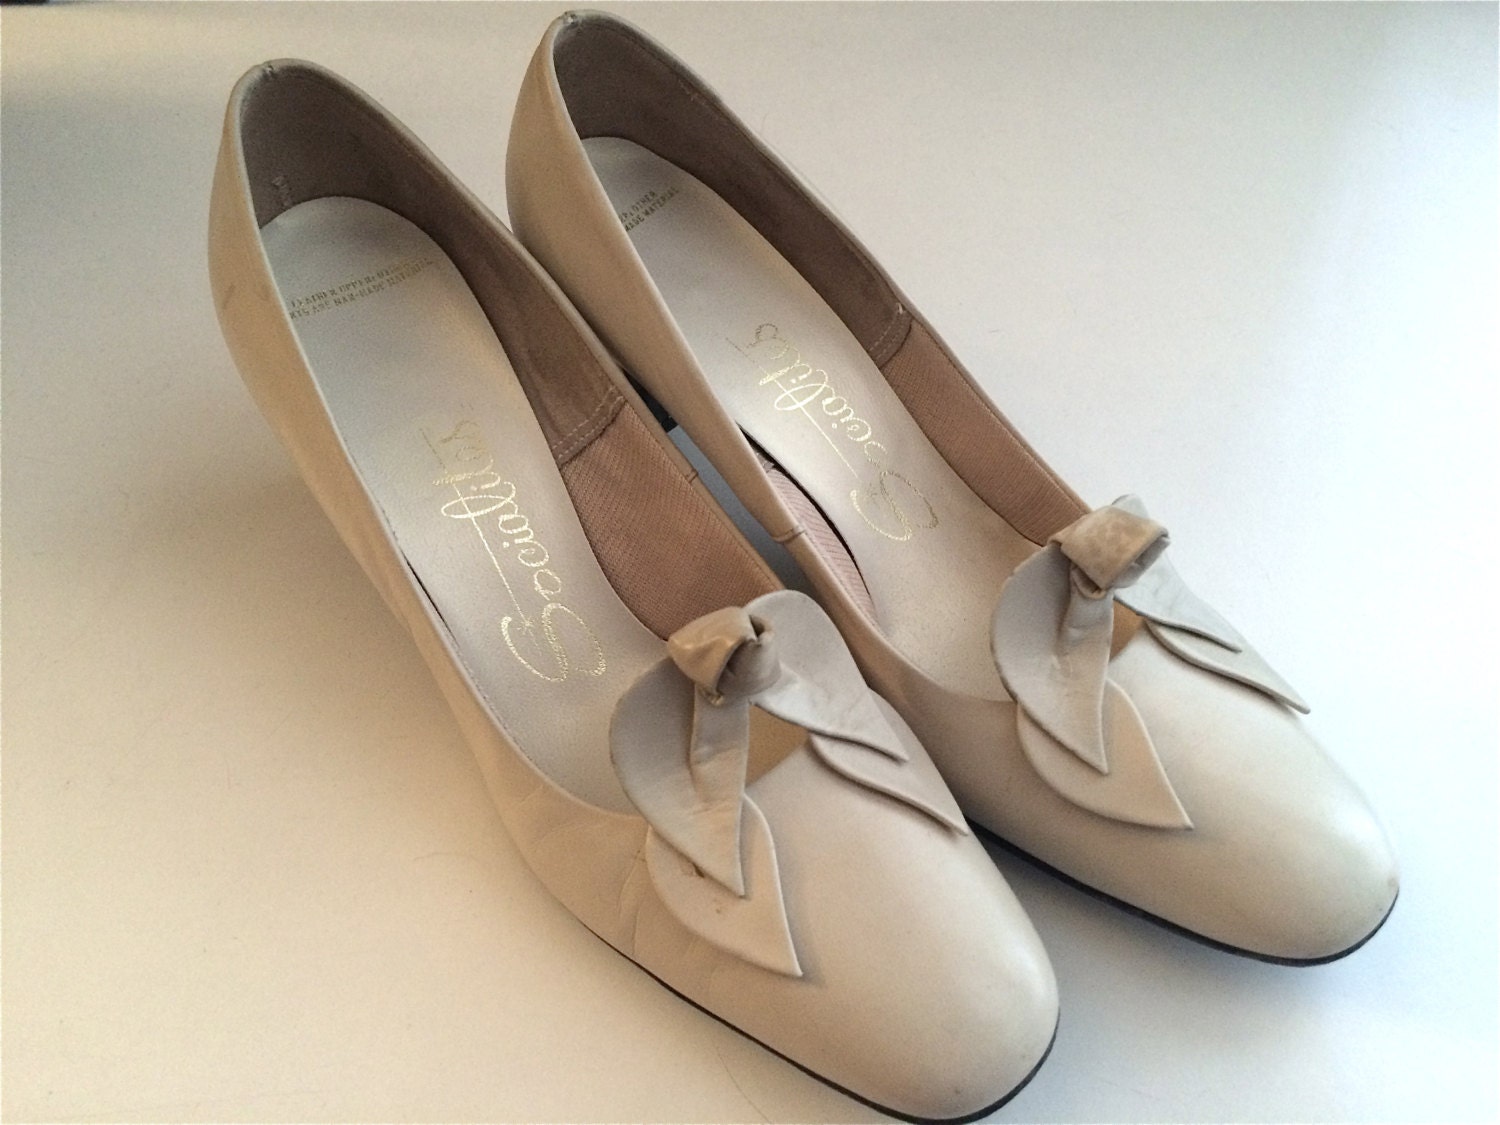 Vintage Shoes Women's 60's Socialites Heels Leather